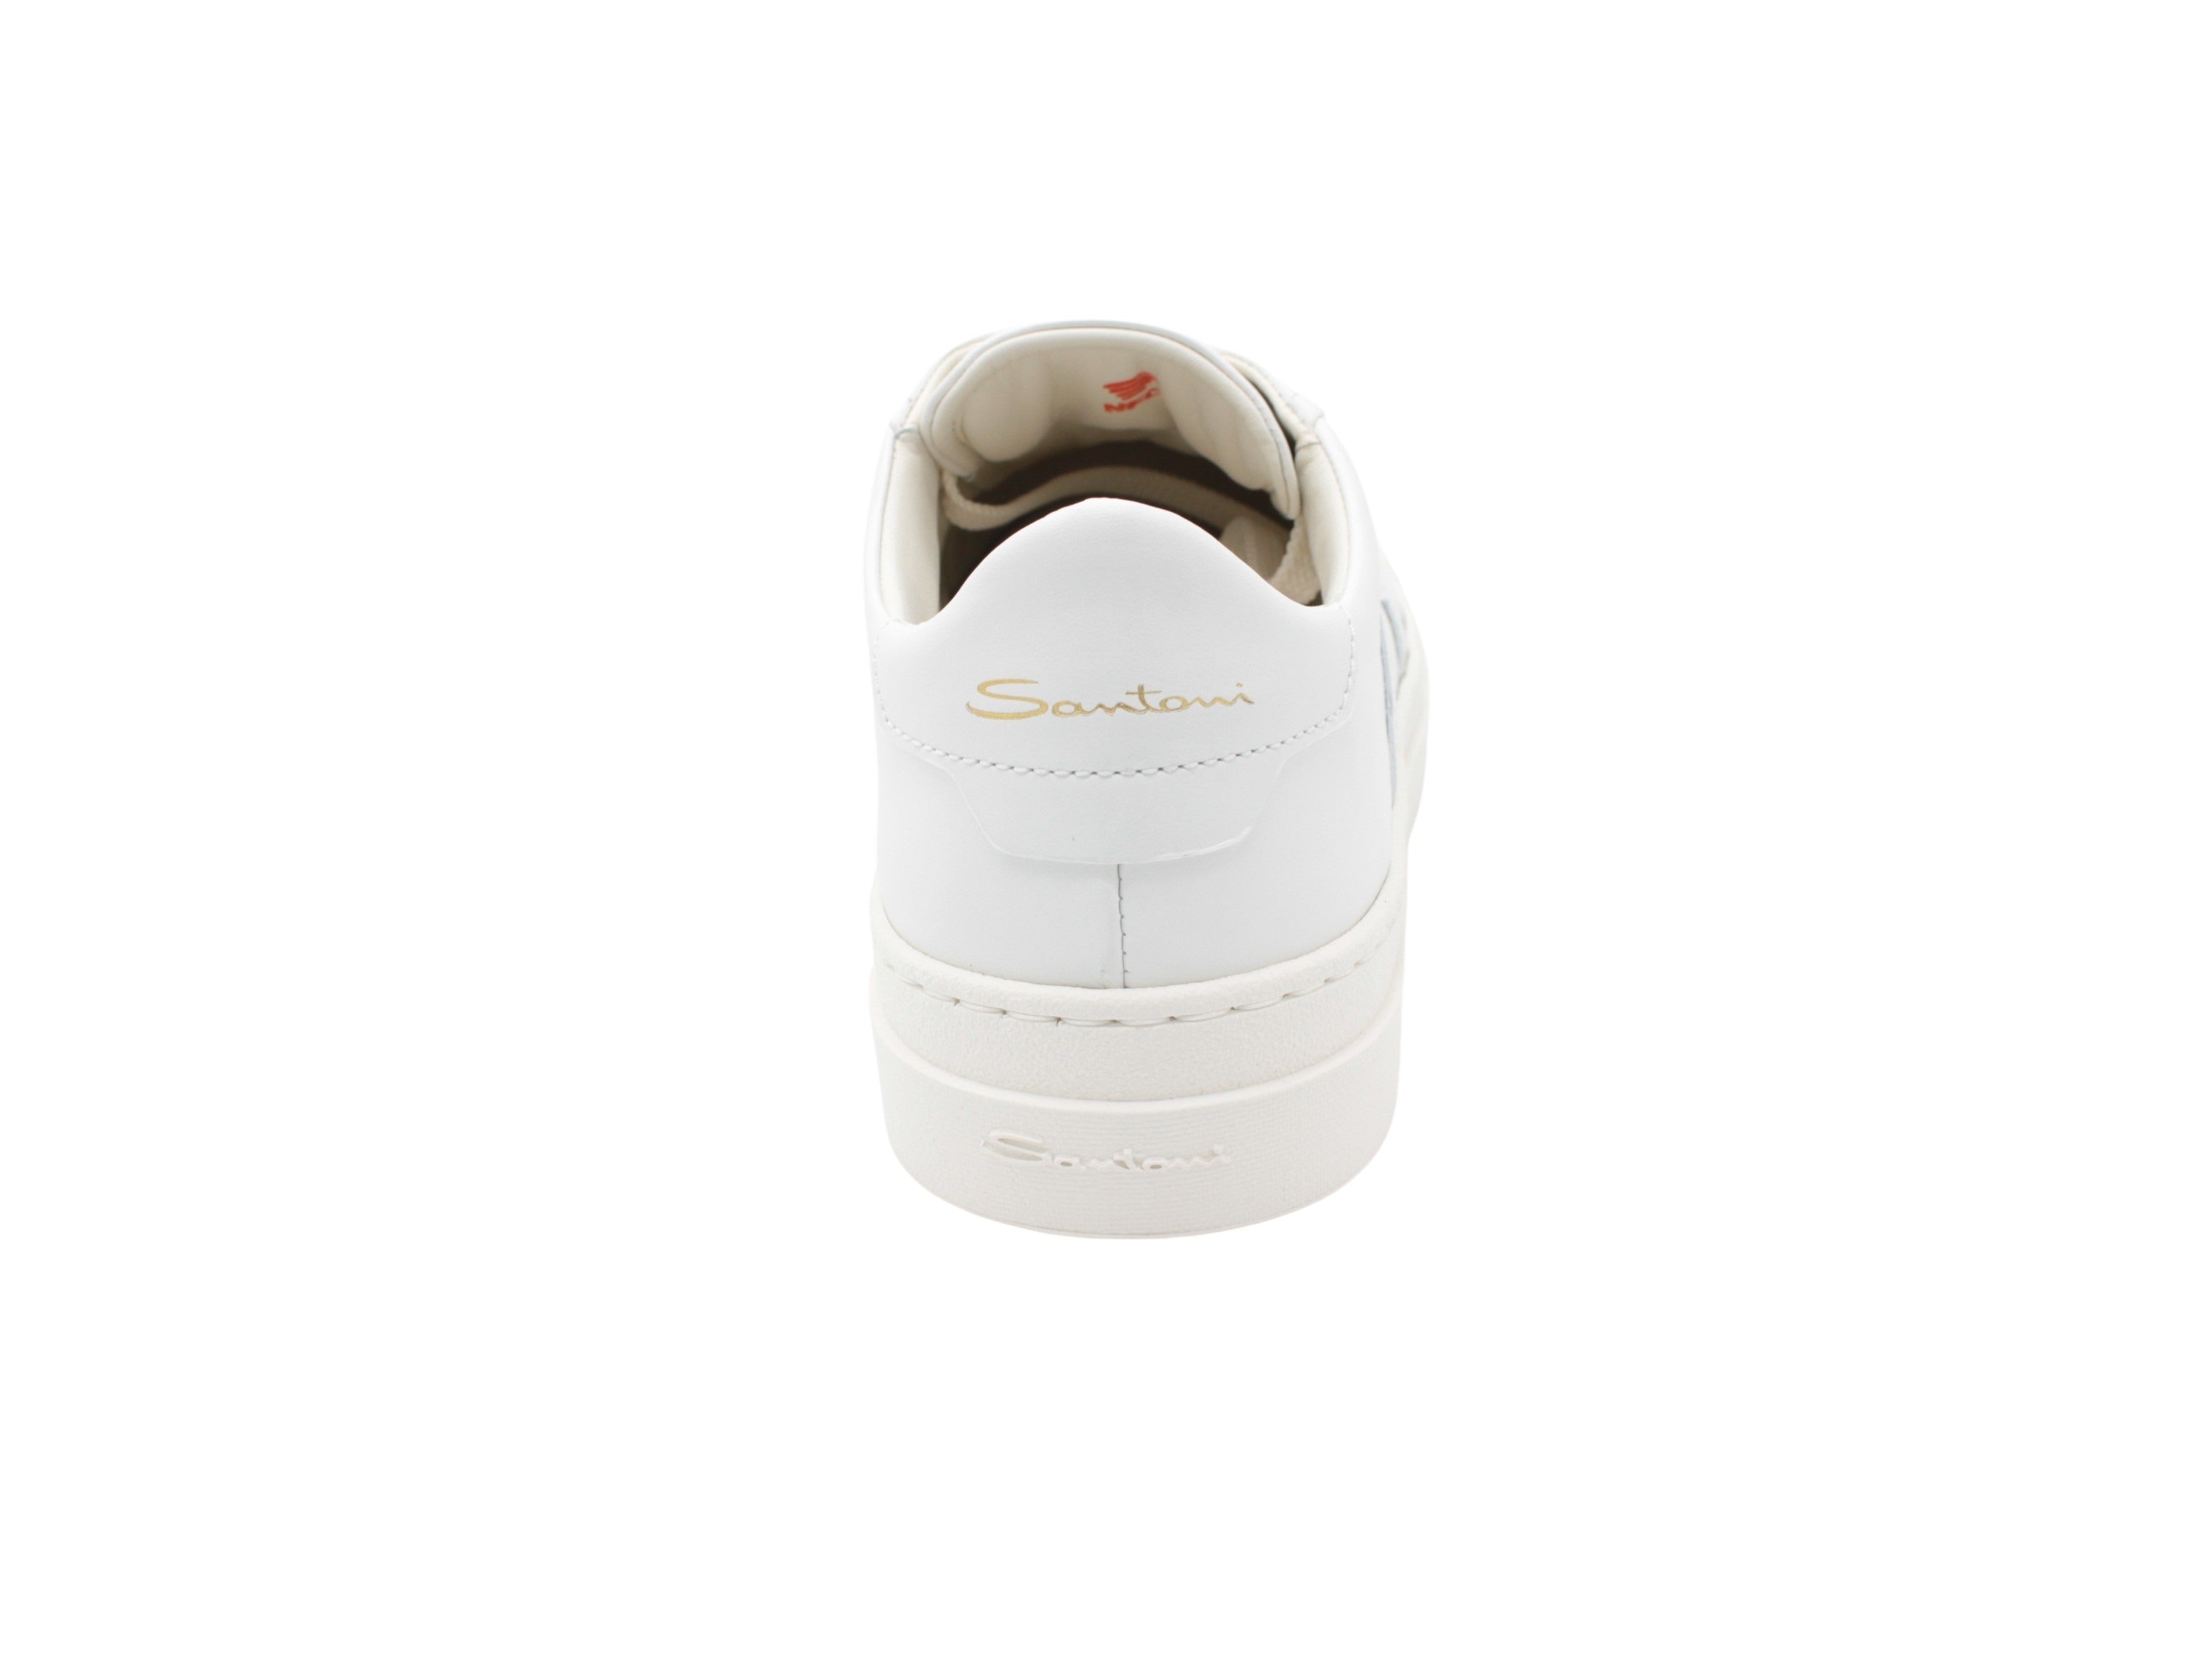 MBGT21779pnngx white sneaker